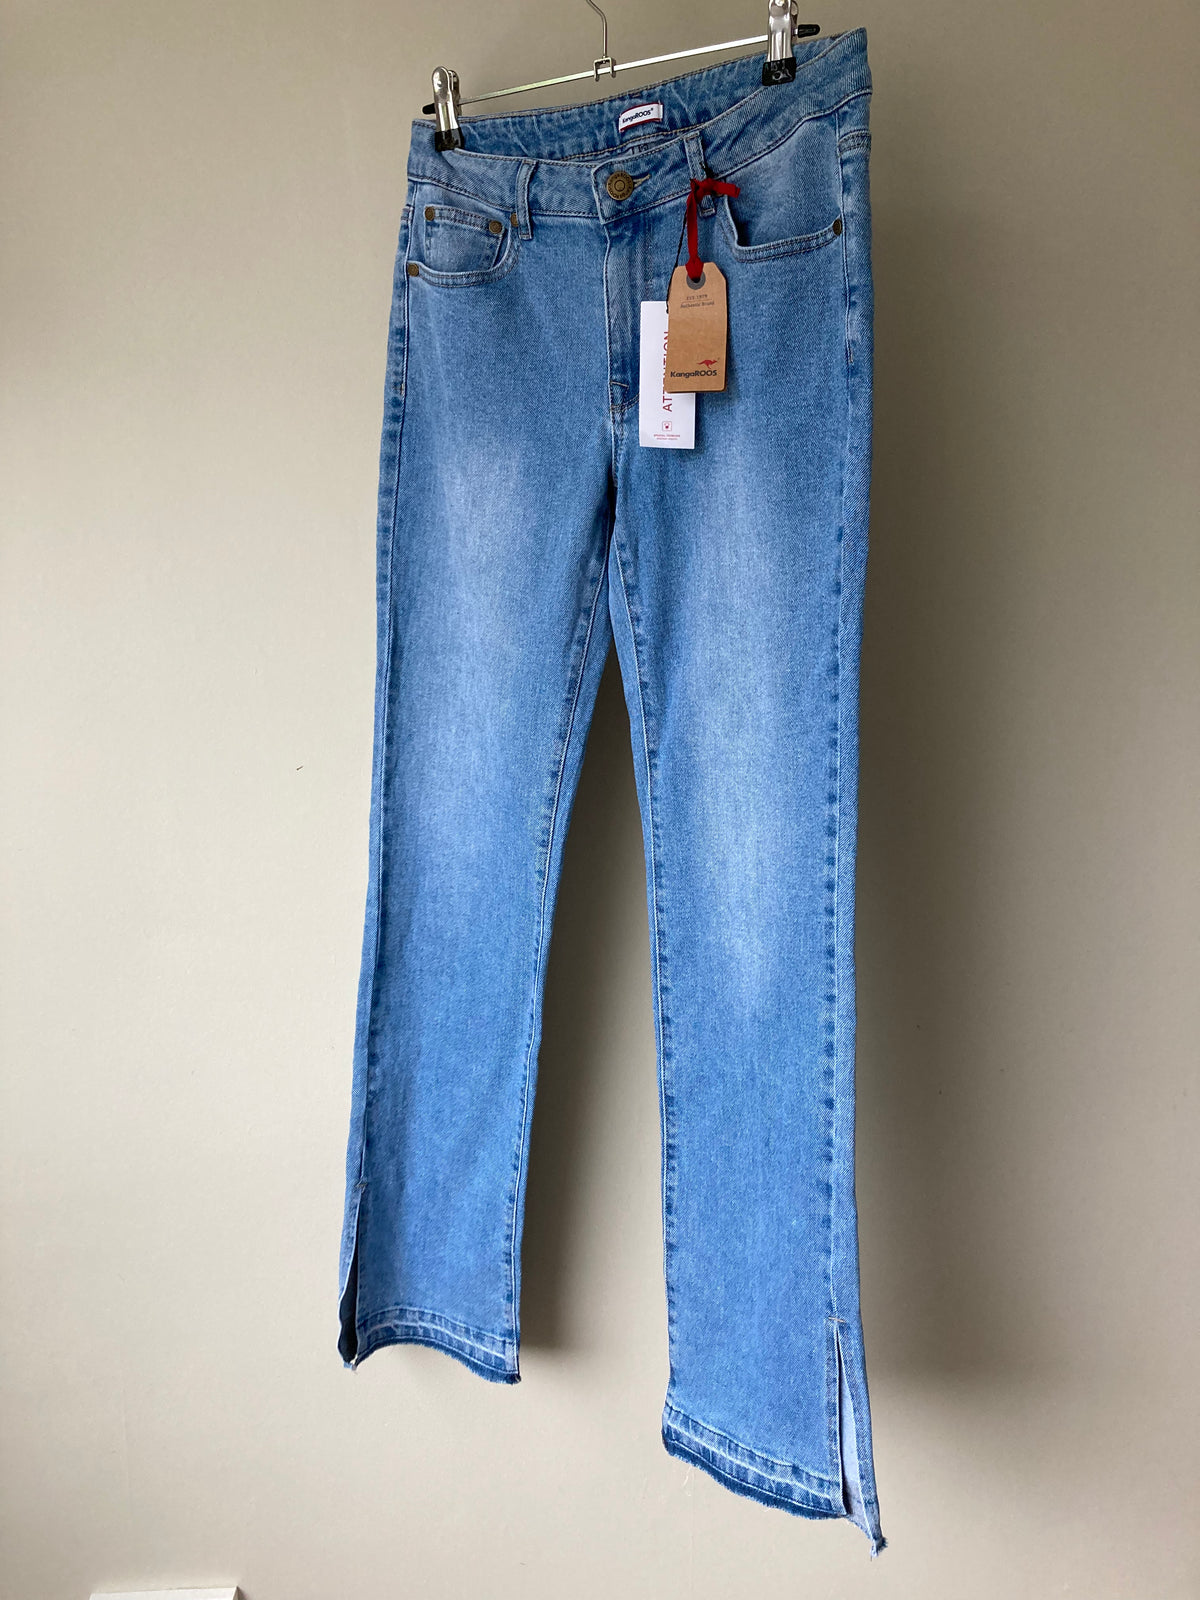 Light blue denim frayed Jeans by KANGAROOS- Size 12